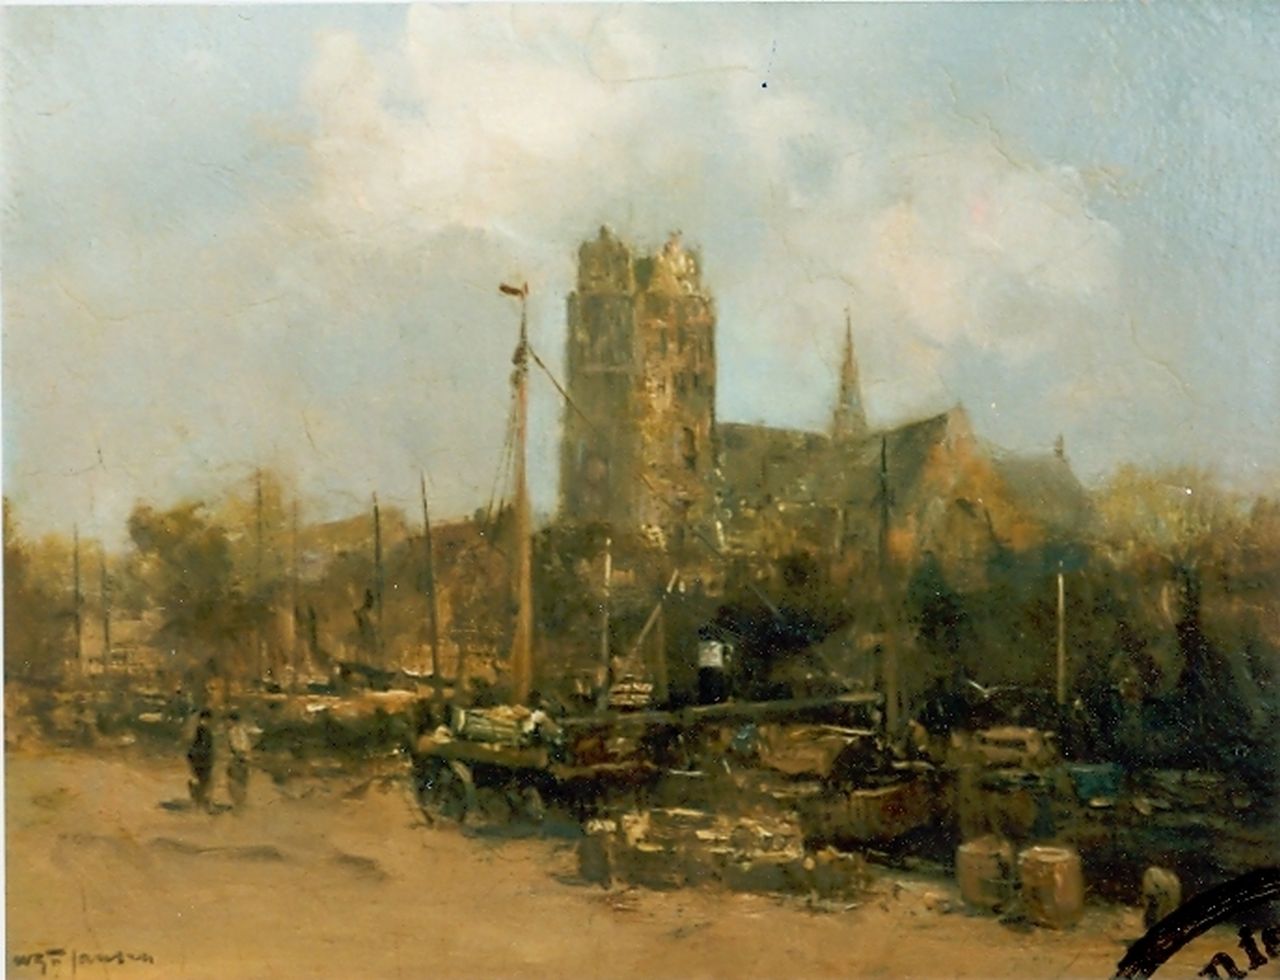 Jansen W.G.F.  | 'Willem' George Frederik Jansen, The limekiln, Dordrecht, oil on canvas 33.5 x 41.5 cm, signed l.l.